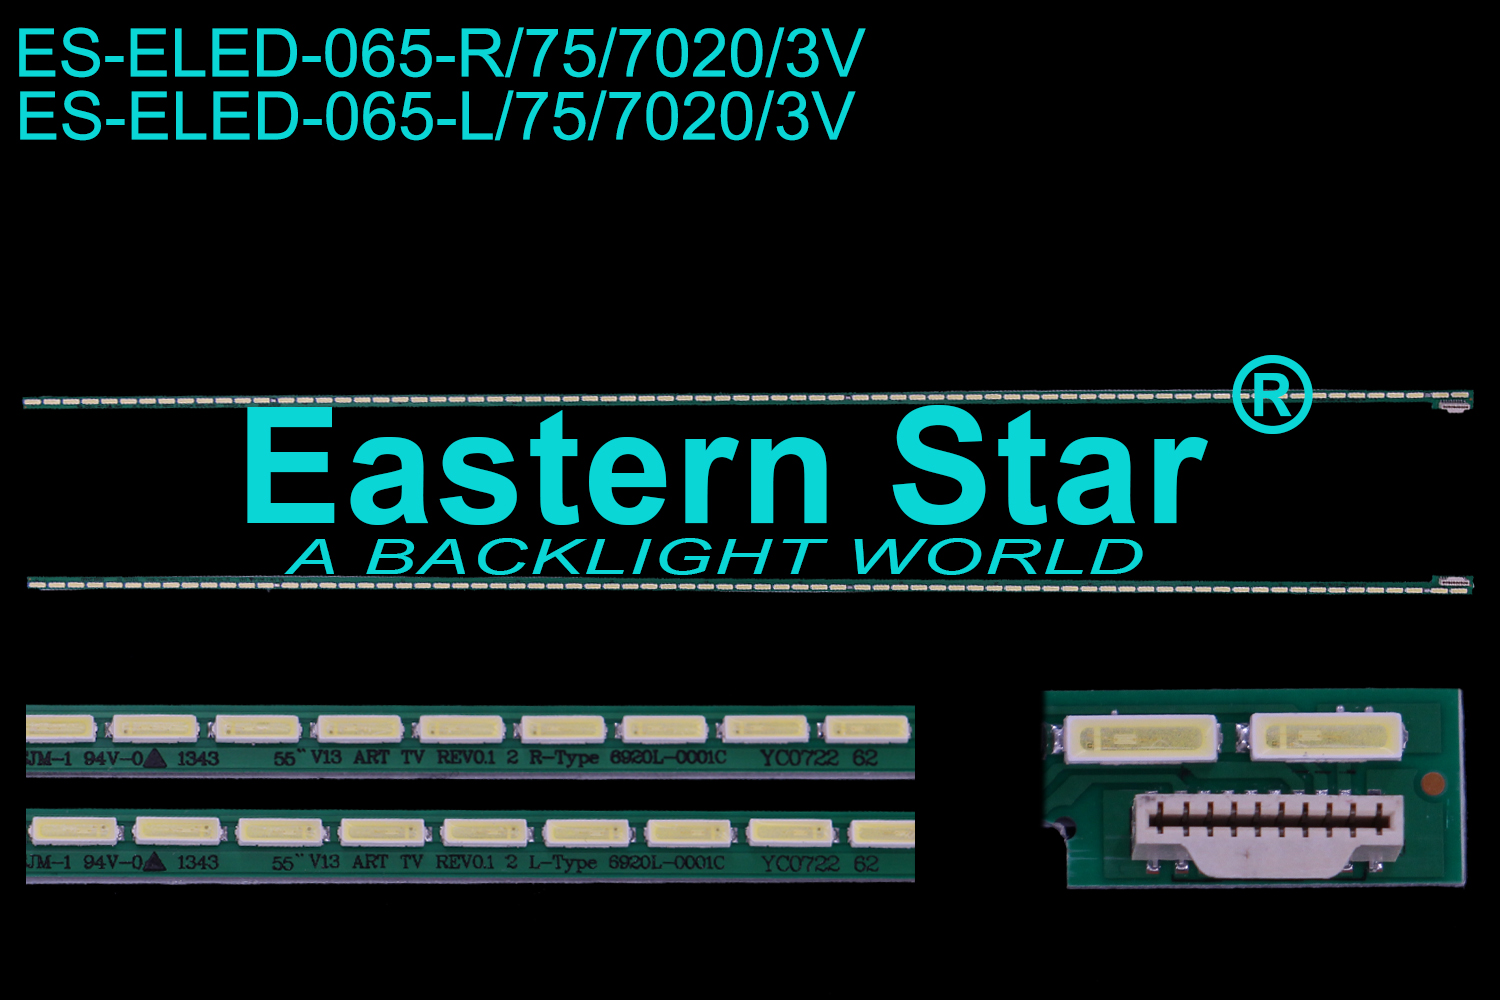 ES-ELED-065 ELED/EDGE TV Backlight use for Lg 55'' V13 ART TV REV0.1 6 L/R-TYPE 6920-0001C (2)